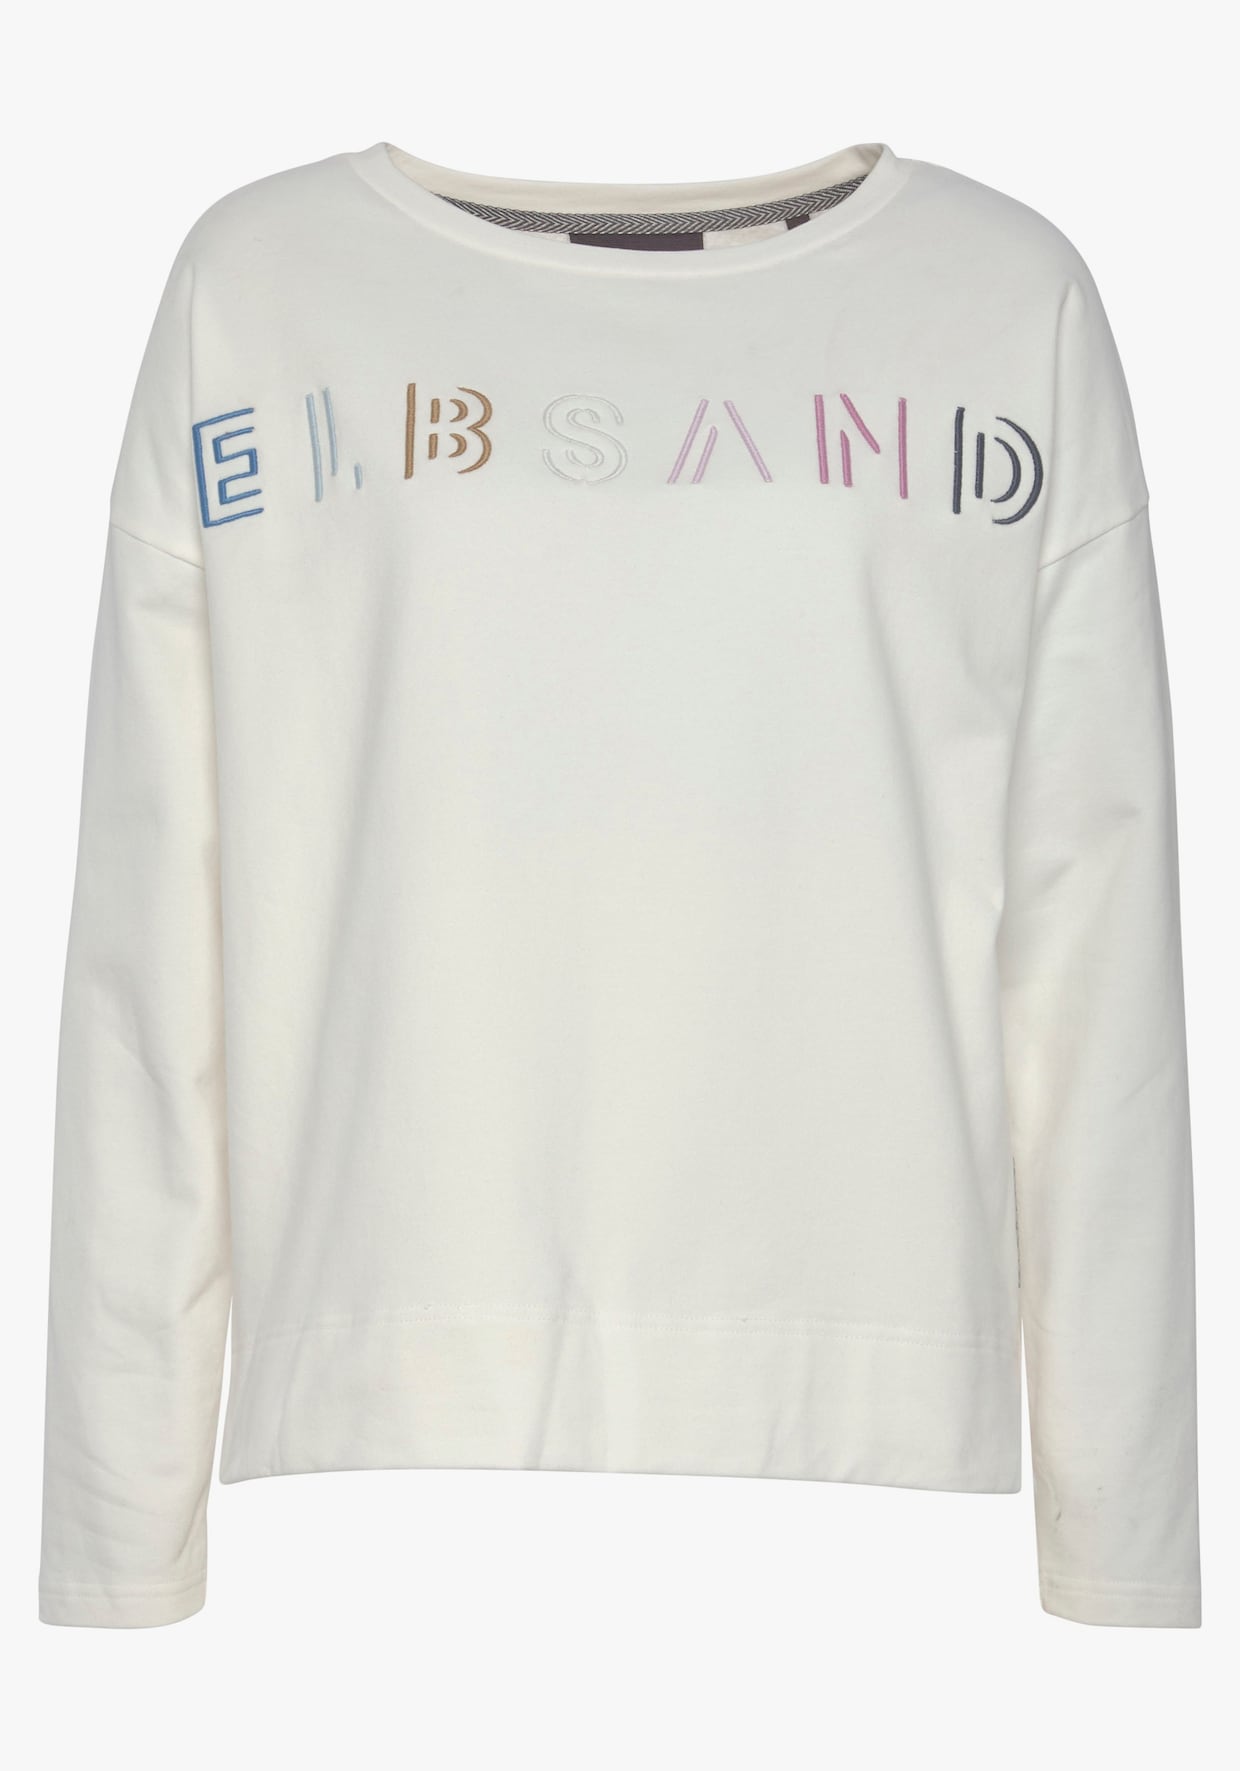 Elbsand Sweat-shirt - blanc